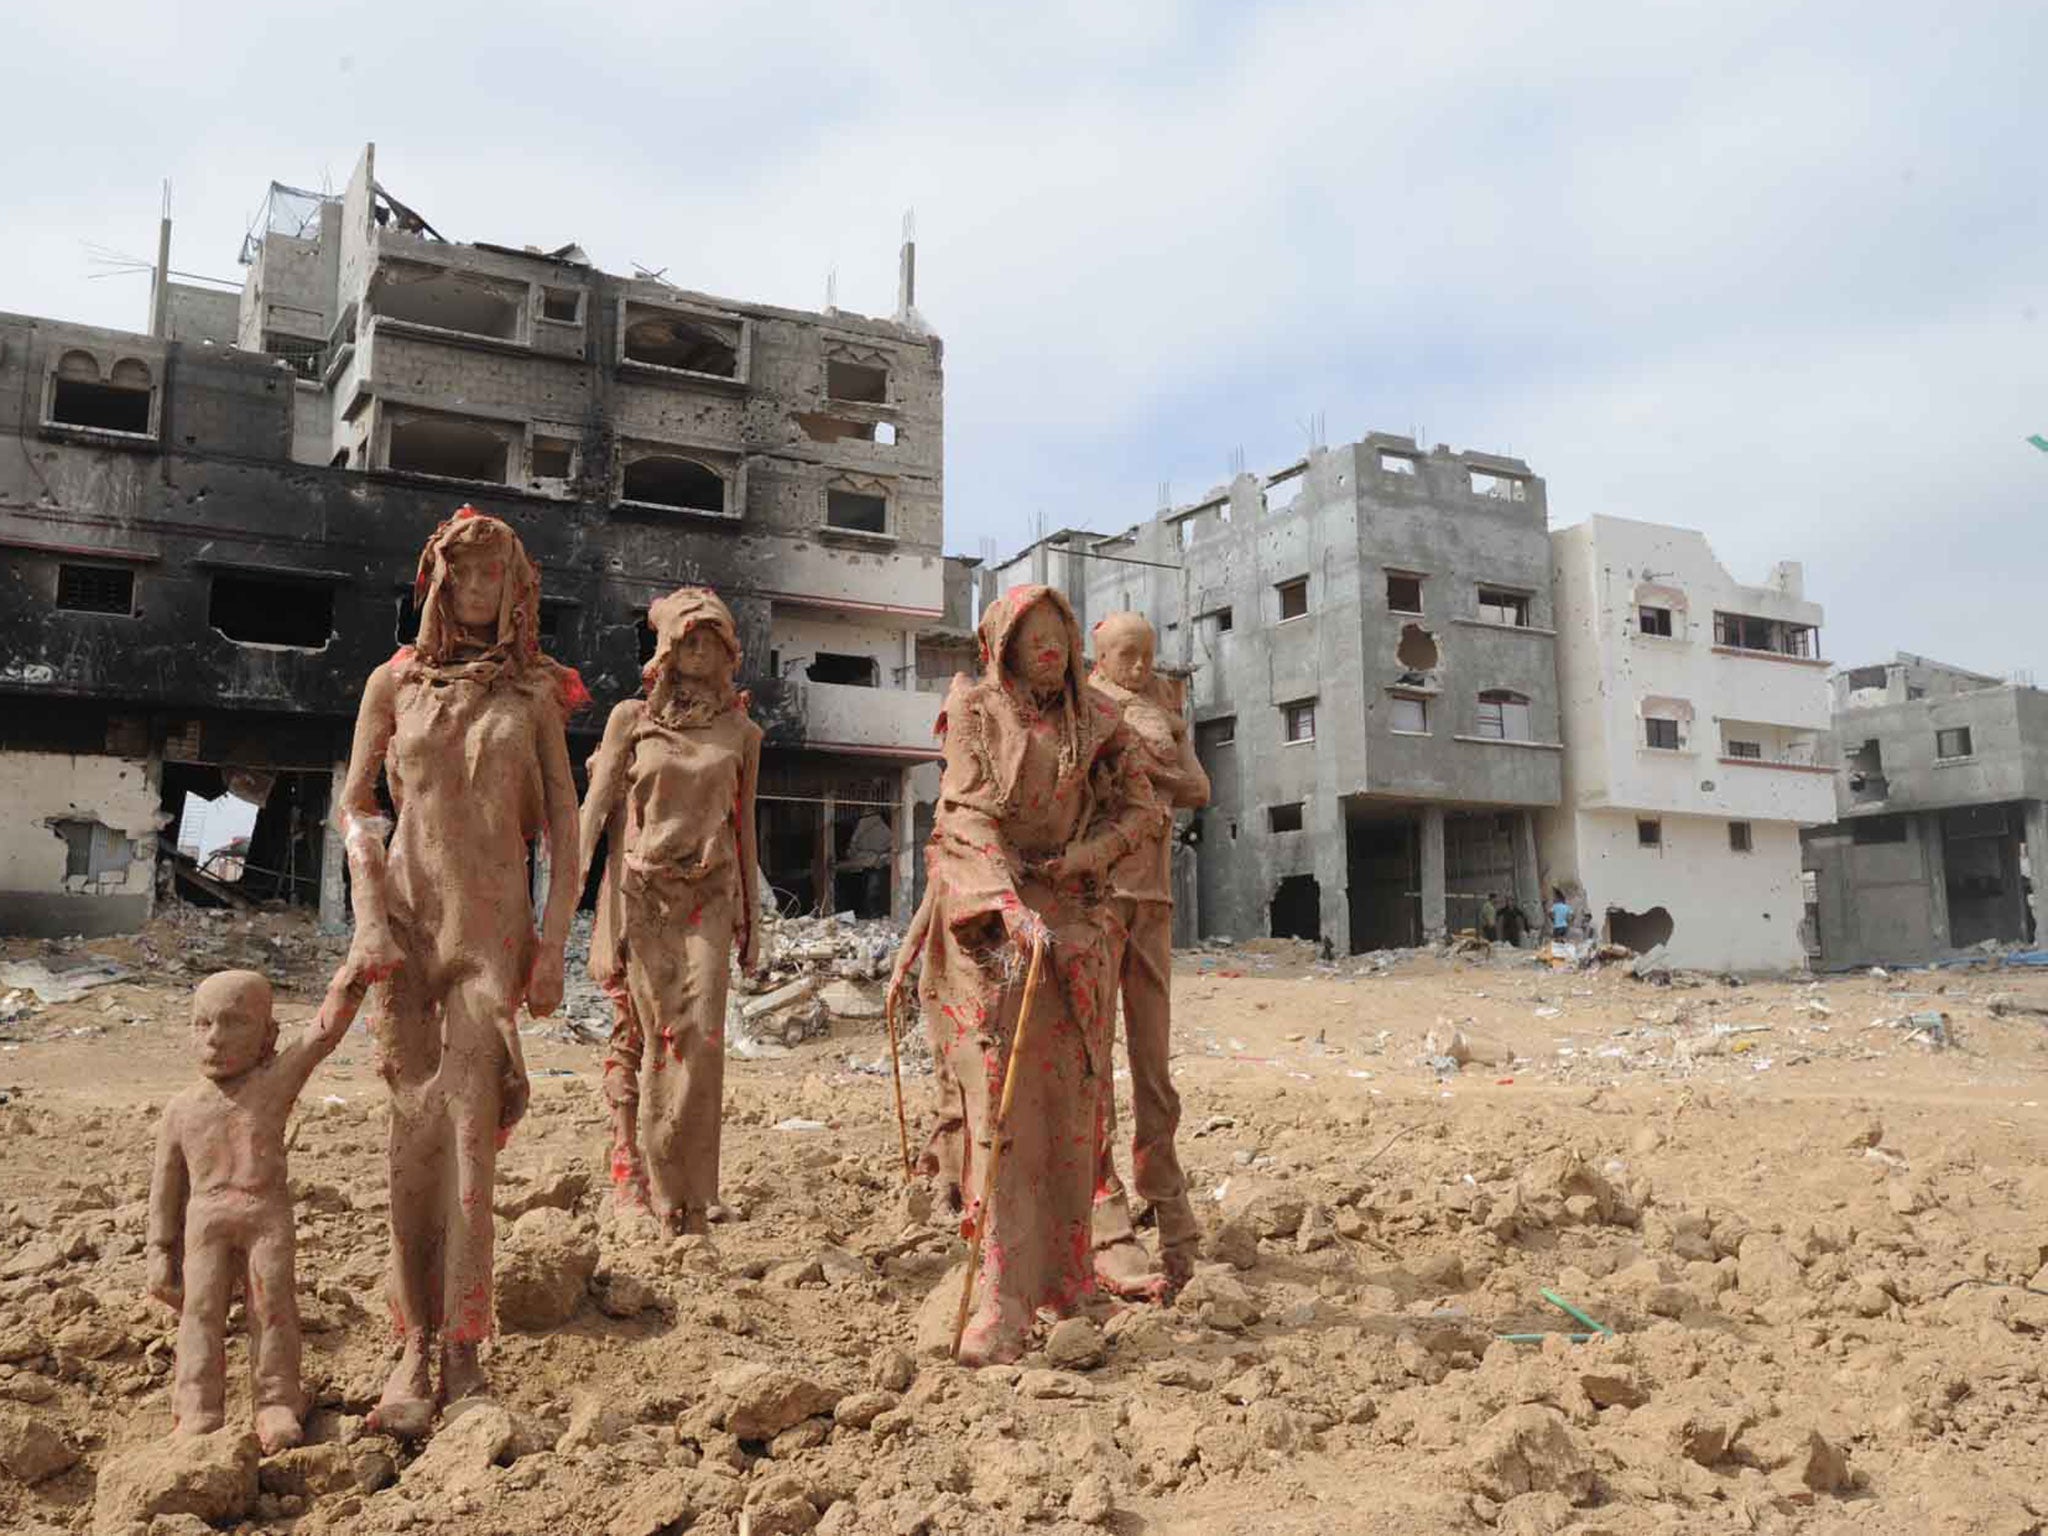 Iyad Sabbah’s 'Worn Out' installation in Gaza